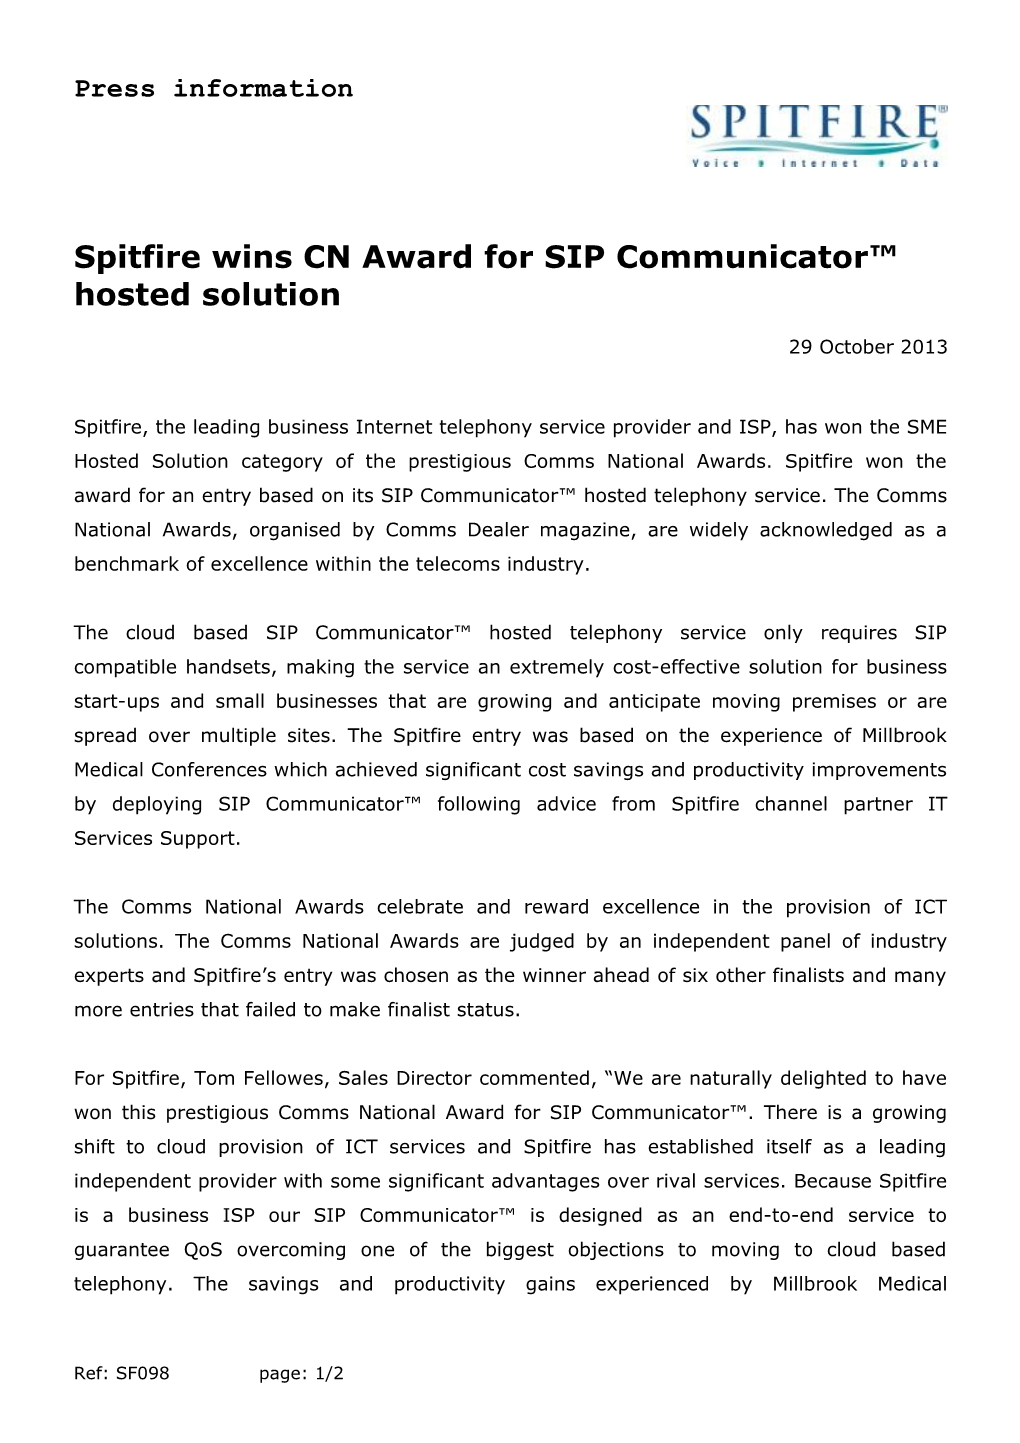 Spitfire Wins CN Award for SIP Communicator Hosted Solution